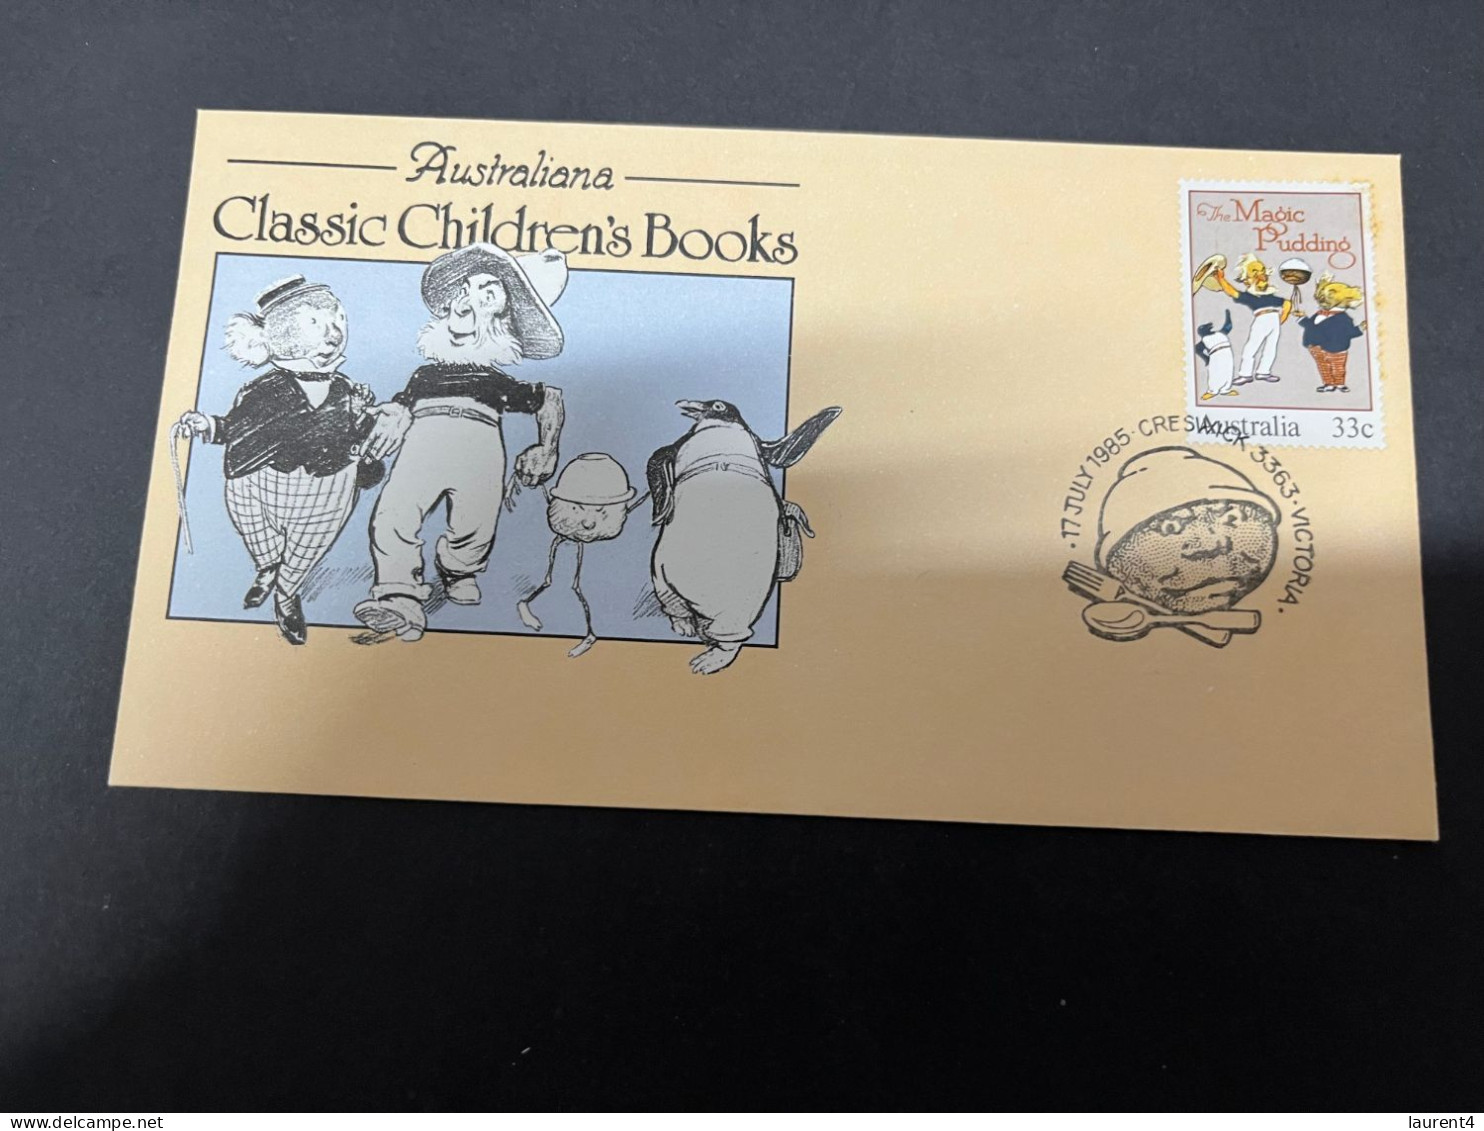 30-9-2023 (2 U 34) Australia FDC - 1985 - Classic Children's Books (5 covers)